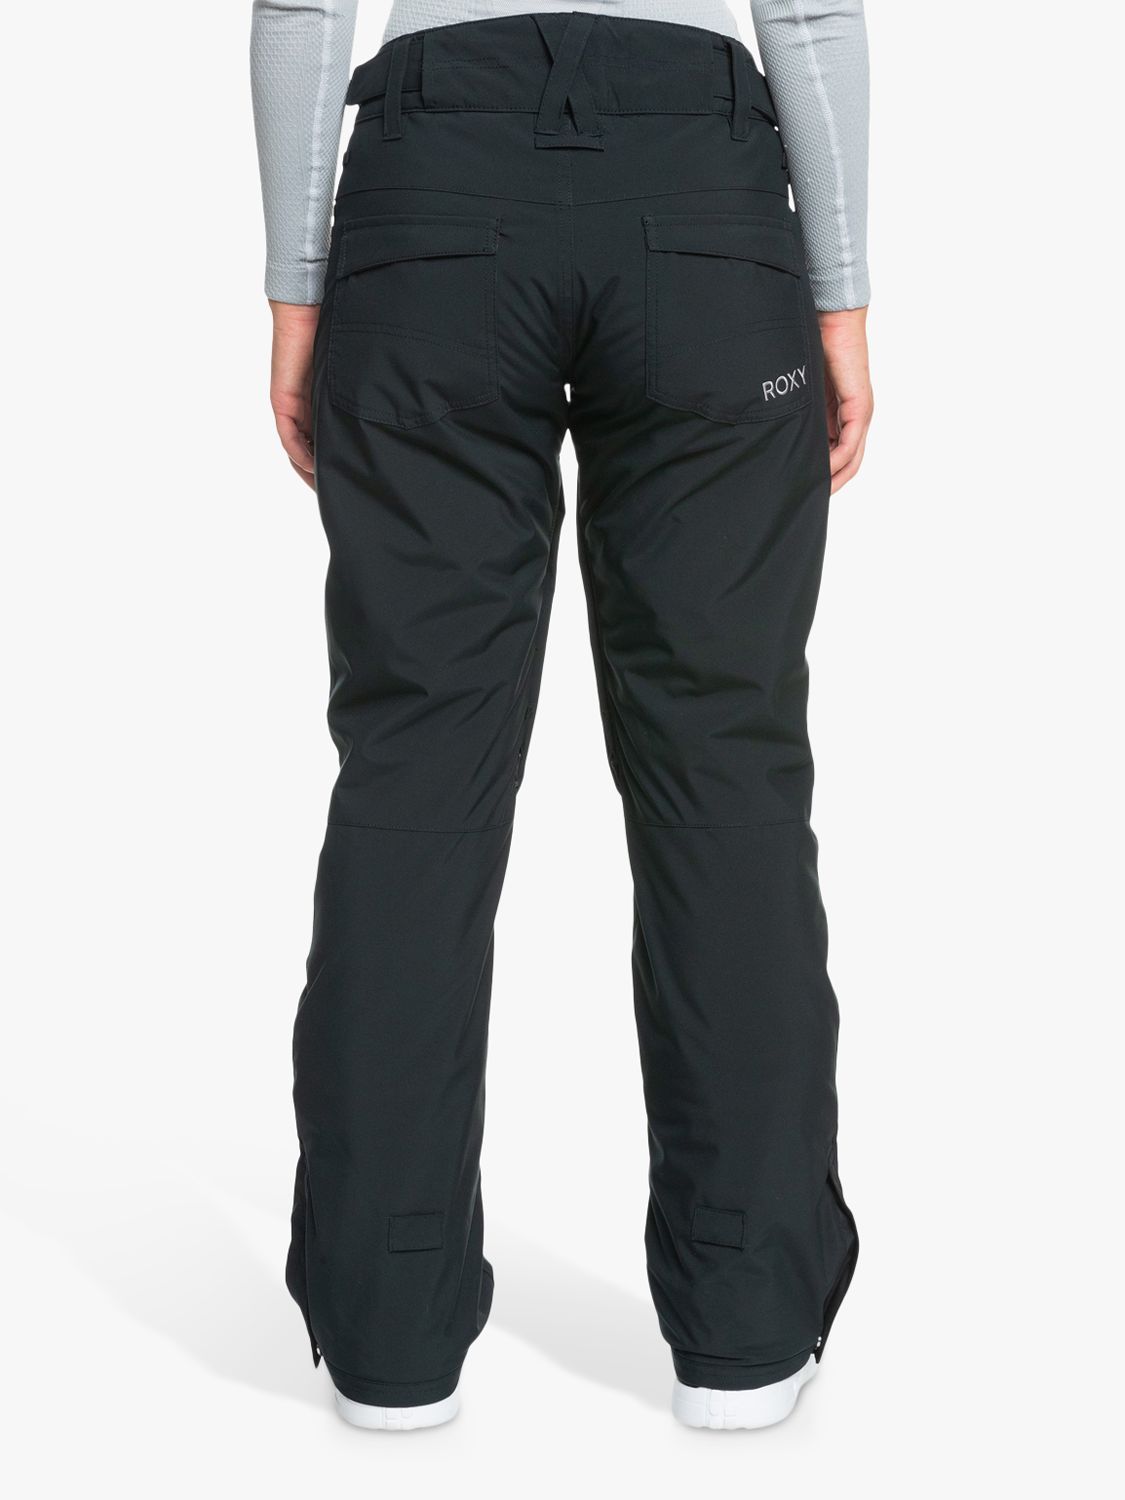 Roxy Technical Snow/Ski Trousers, True Black, XS